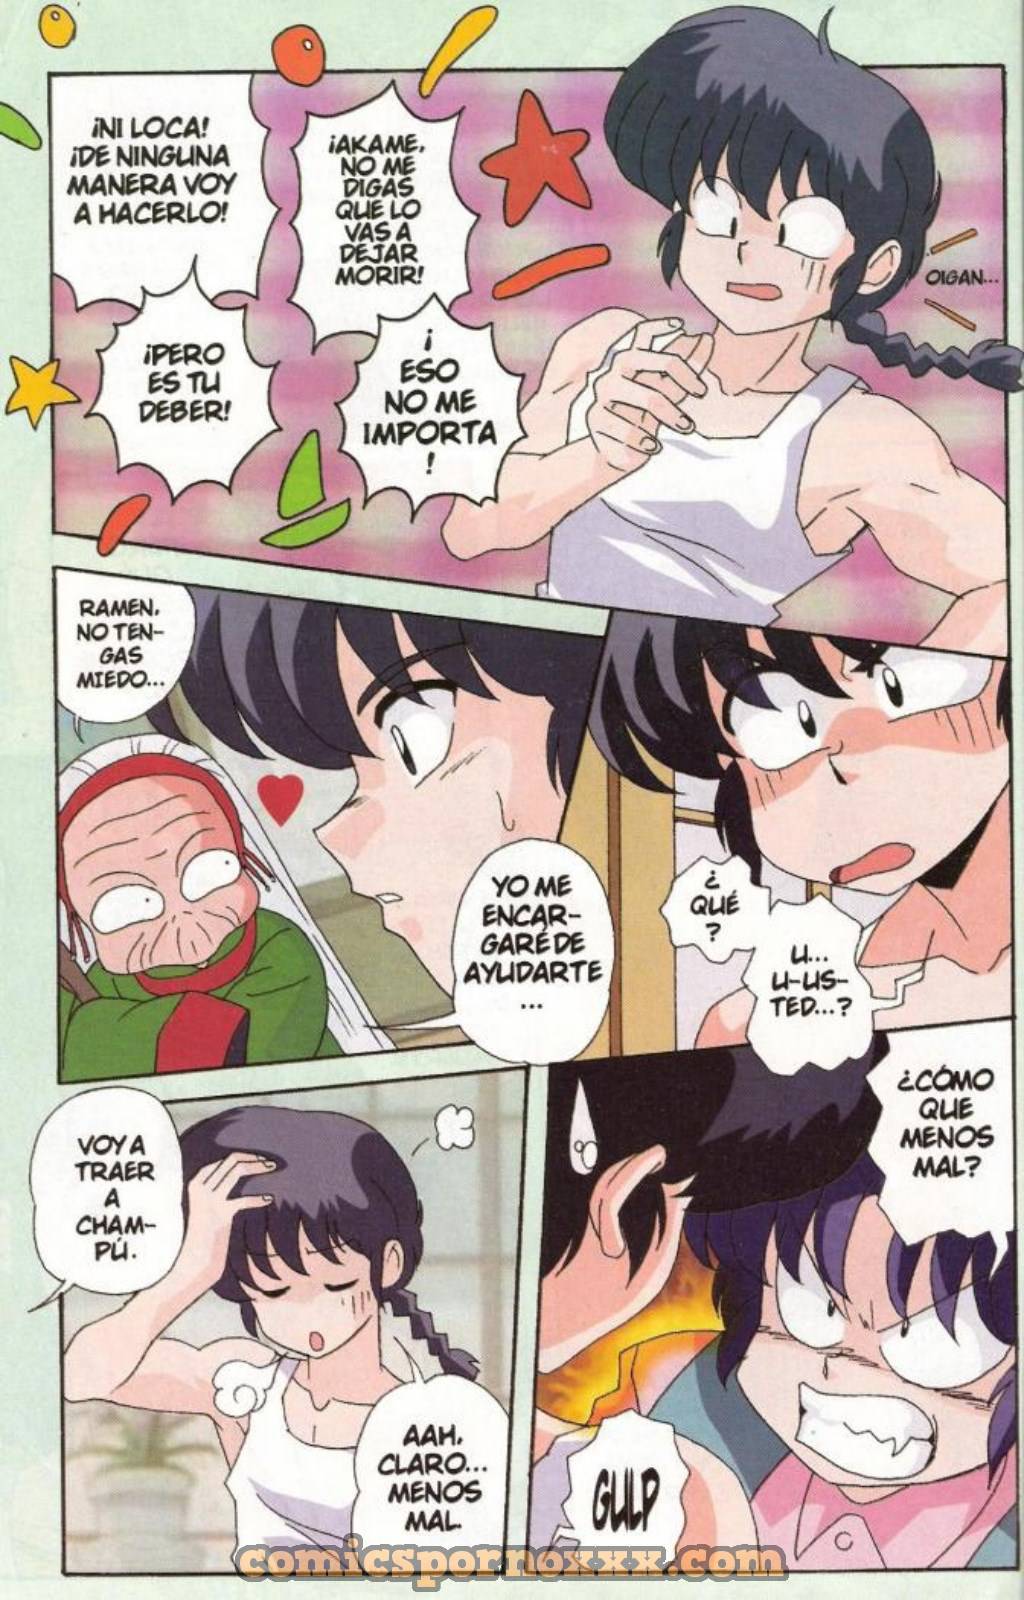 Ramen 1/2 (Parodias 3X) - 7 - Comics Porno - Hentai Manga - Cartoon XXX